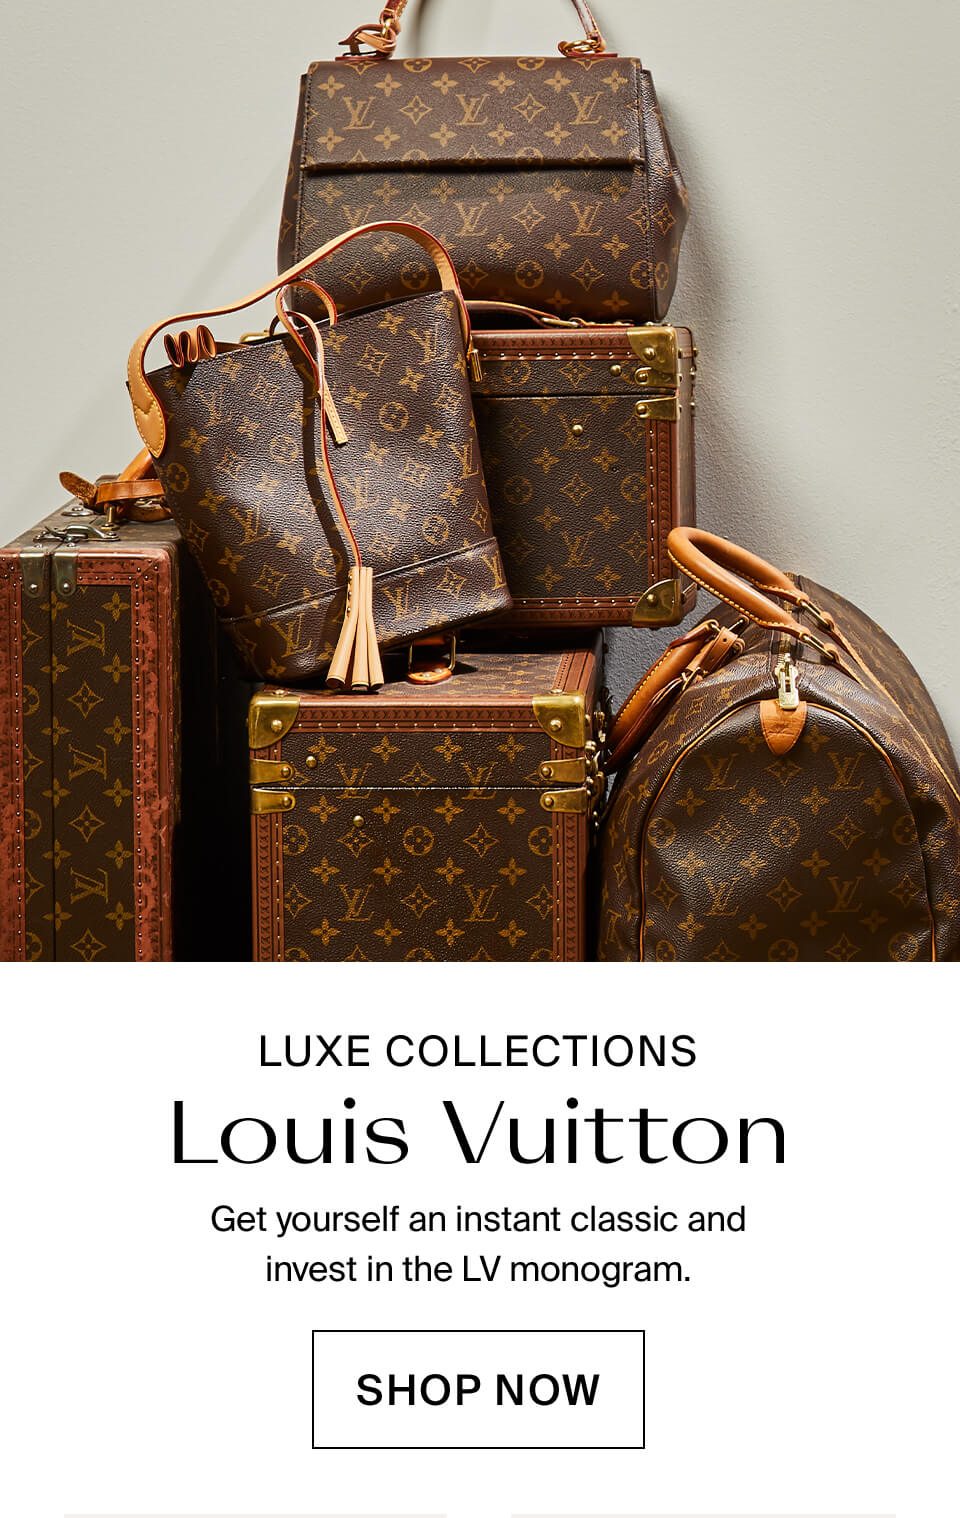 The Louis Vuitton Collection